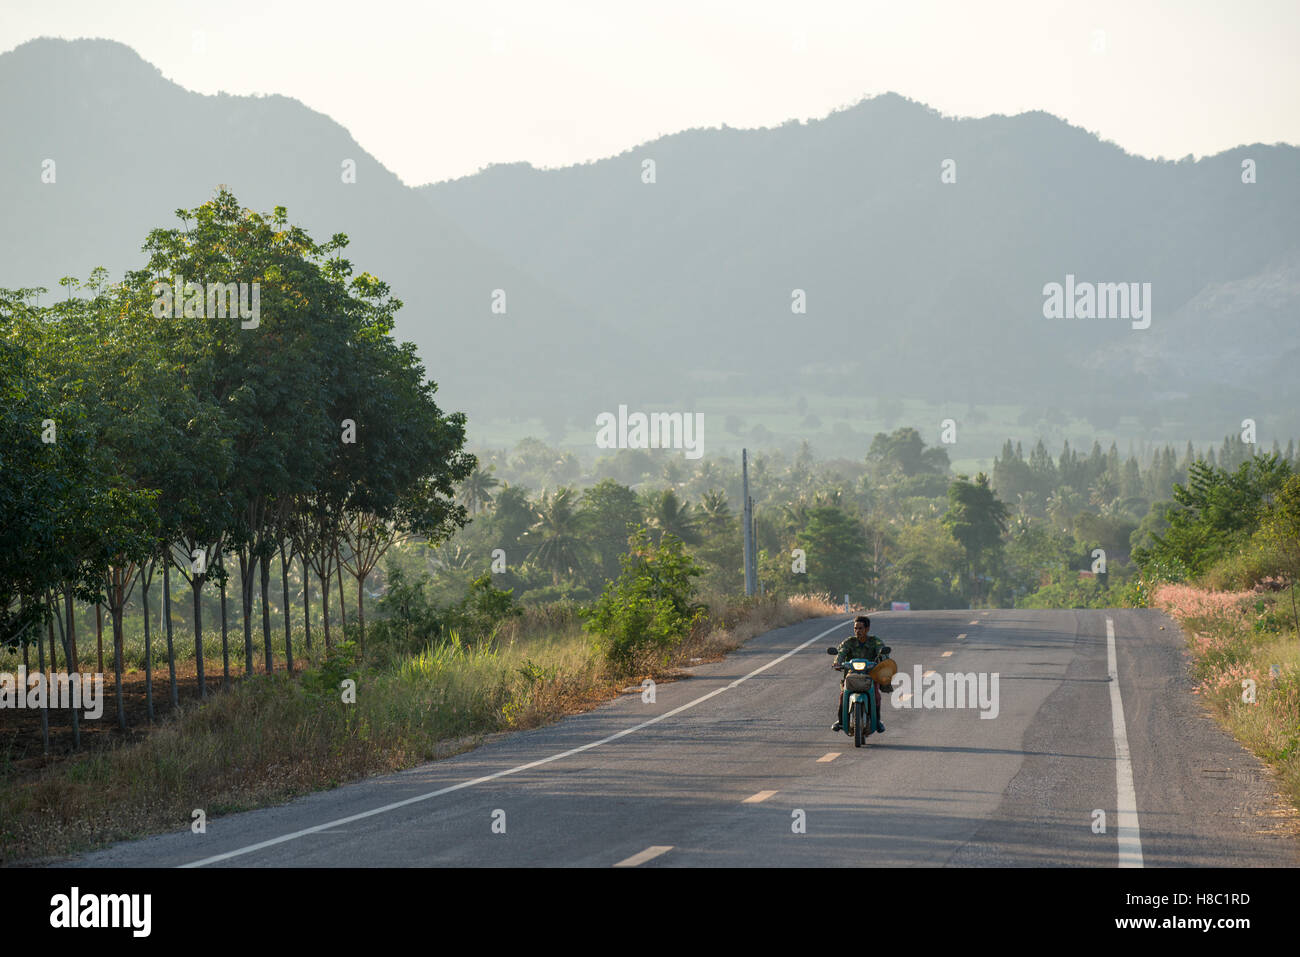 Alltag der Thais in Hua Hin Thailand Stockfoto